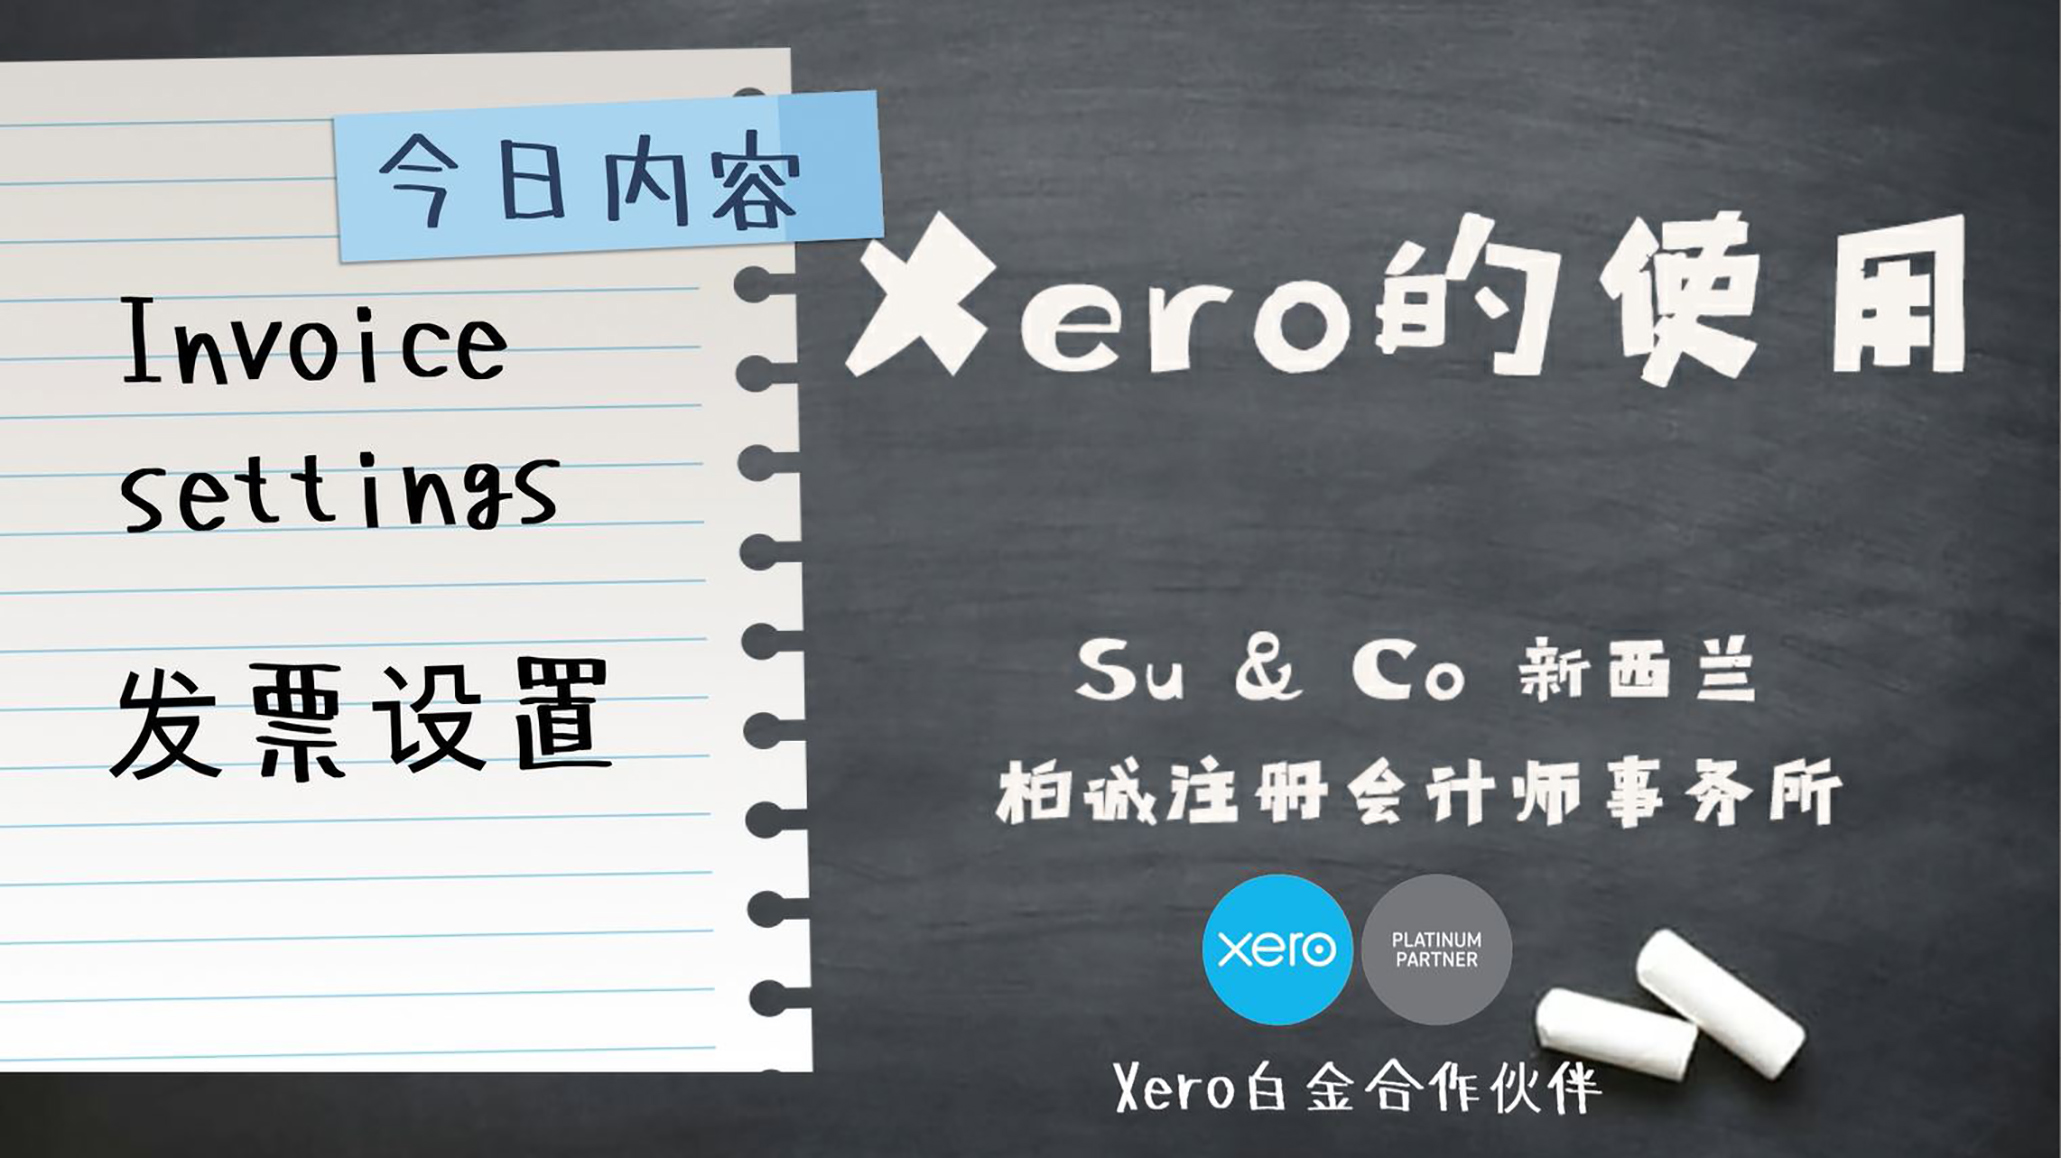 Xero的使用教程 - Invoice settings 发票设置